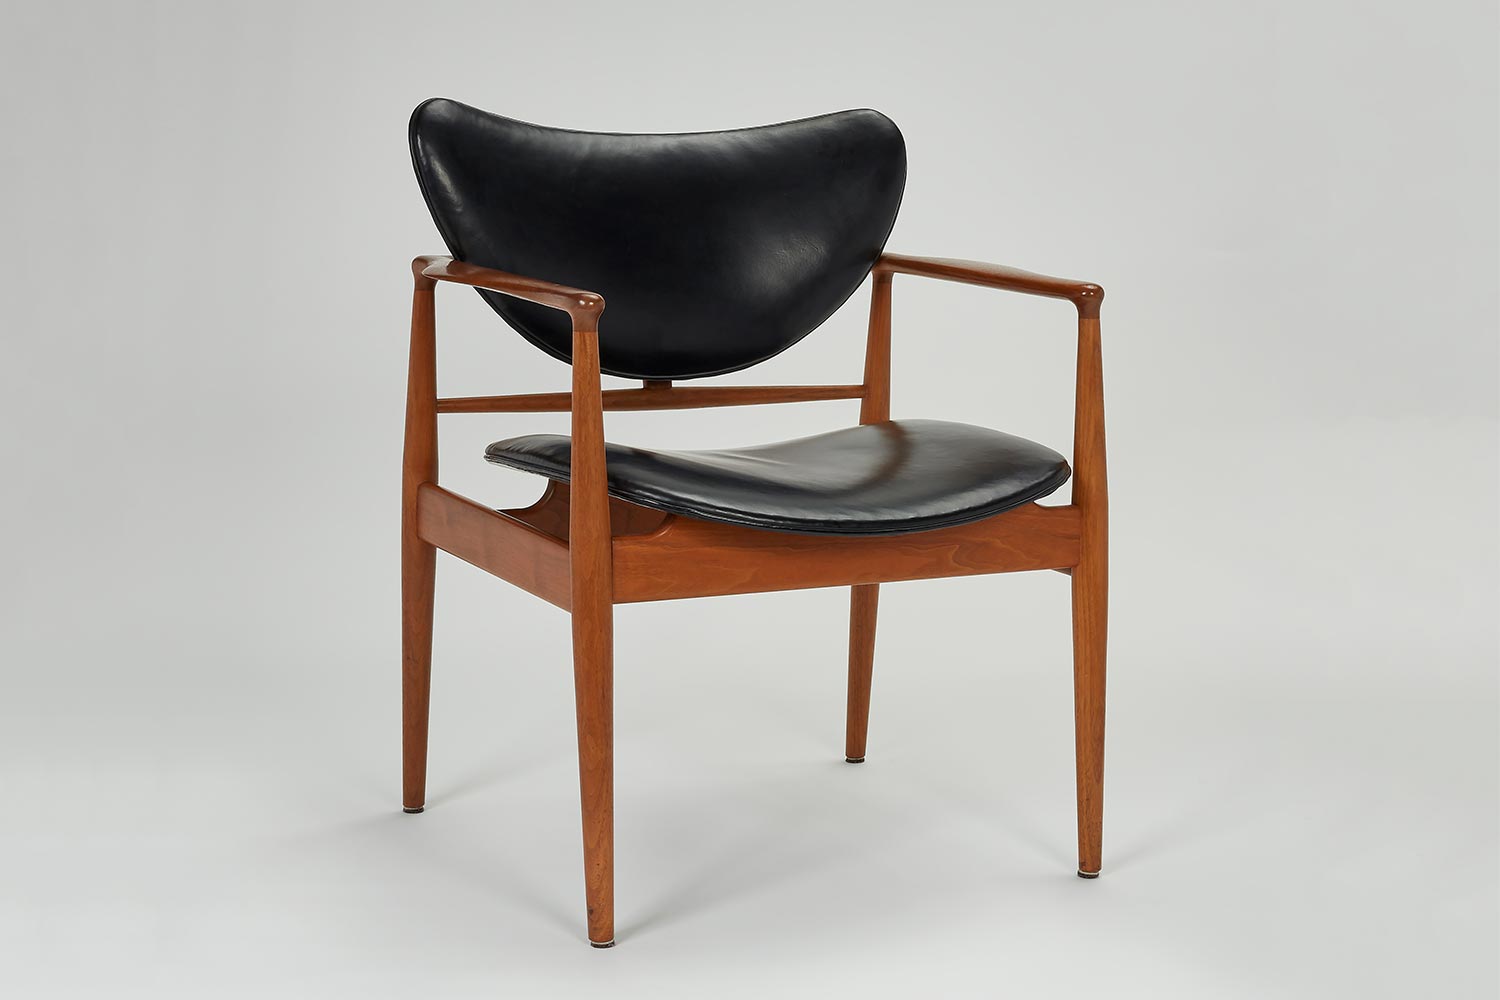 Finn Juhl (Danish, 1912–1989), manufactured by Baker Furniture Inc. (Grand Rapids, Michigan, founded 1890), Armchair.